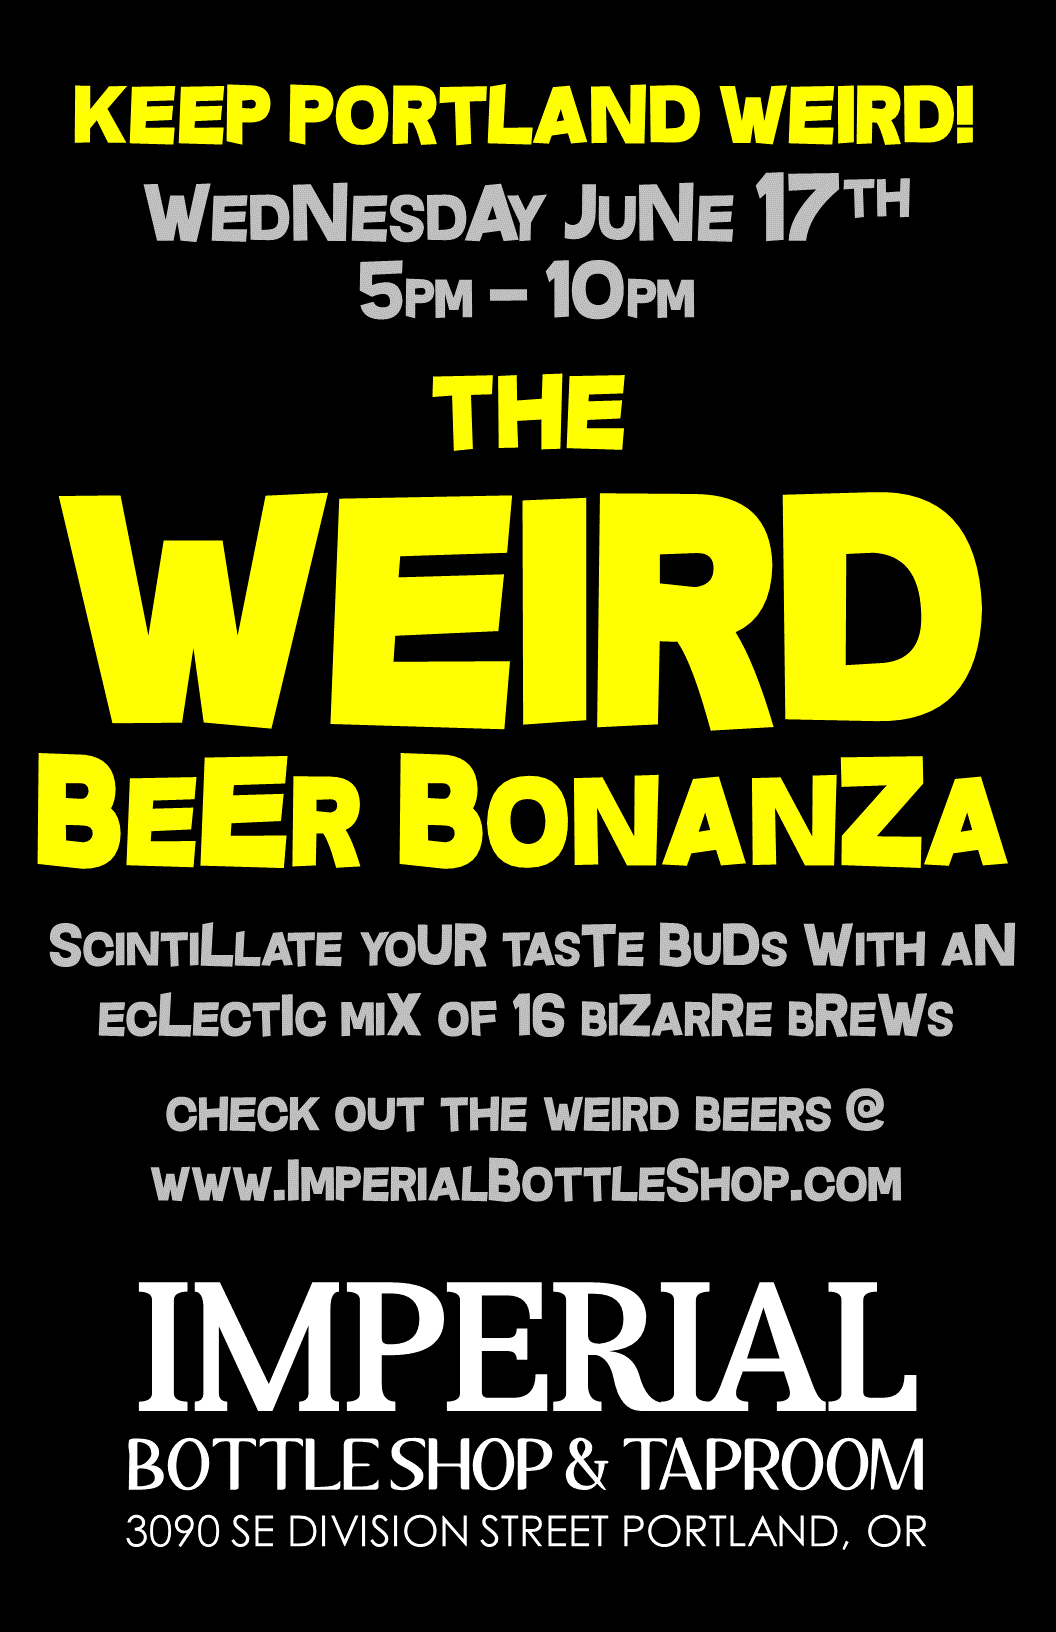 Keep Portland Weird Beer Bonanza at Imperial Bottleshop